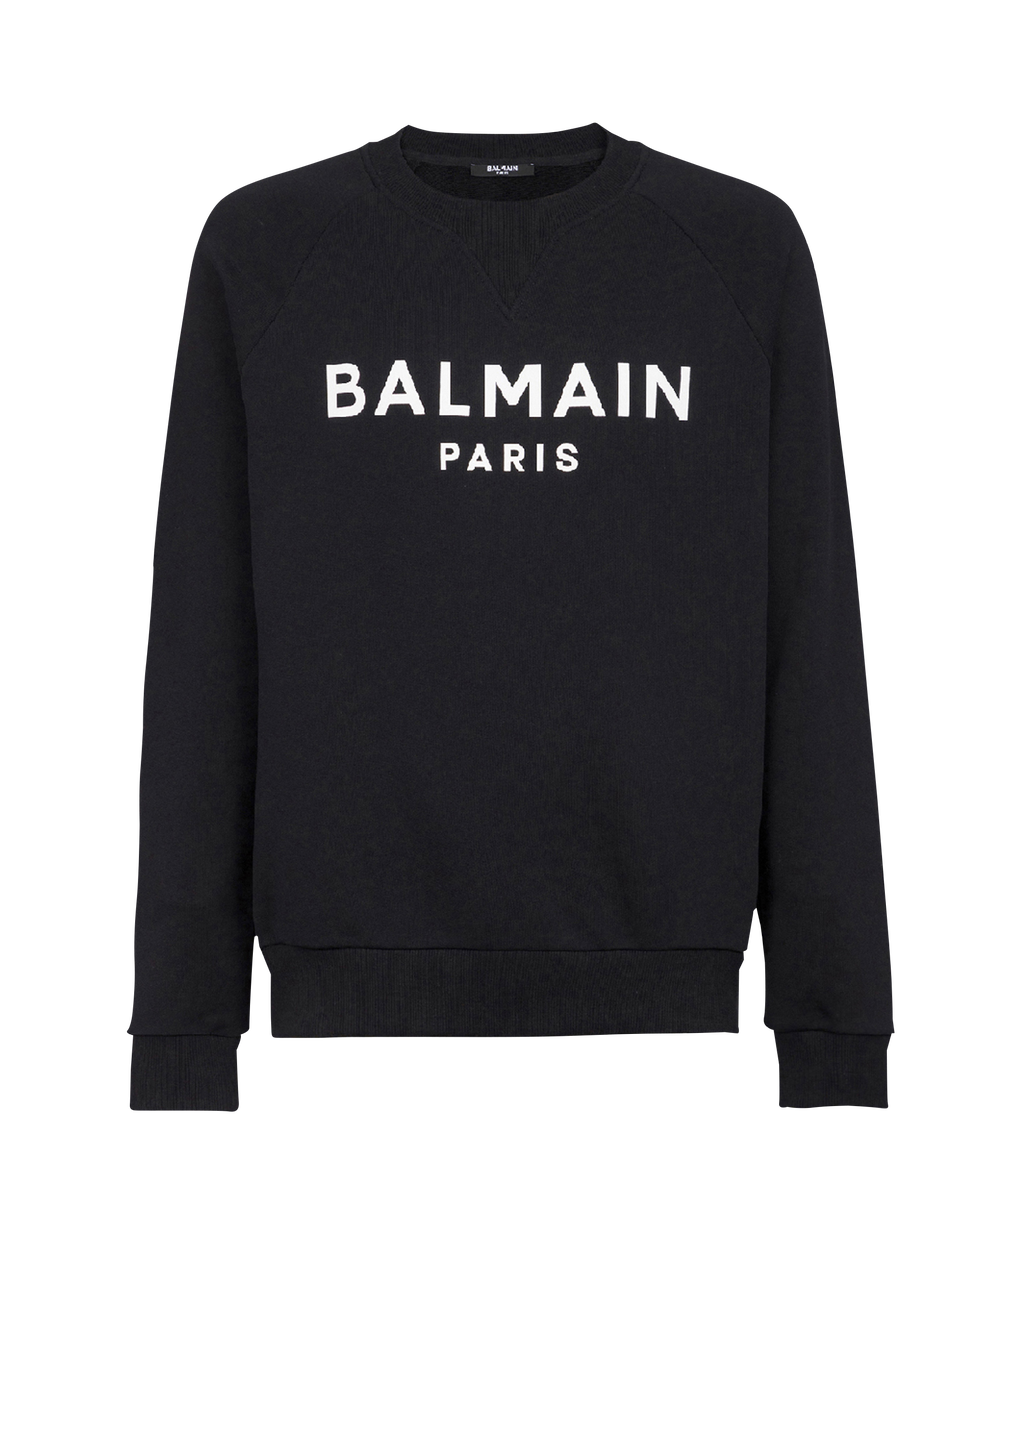 Eco-designed cotton sweatshirt with Balmain Paris logo print, black, hi-res